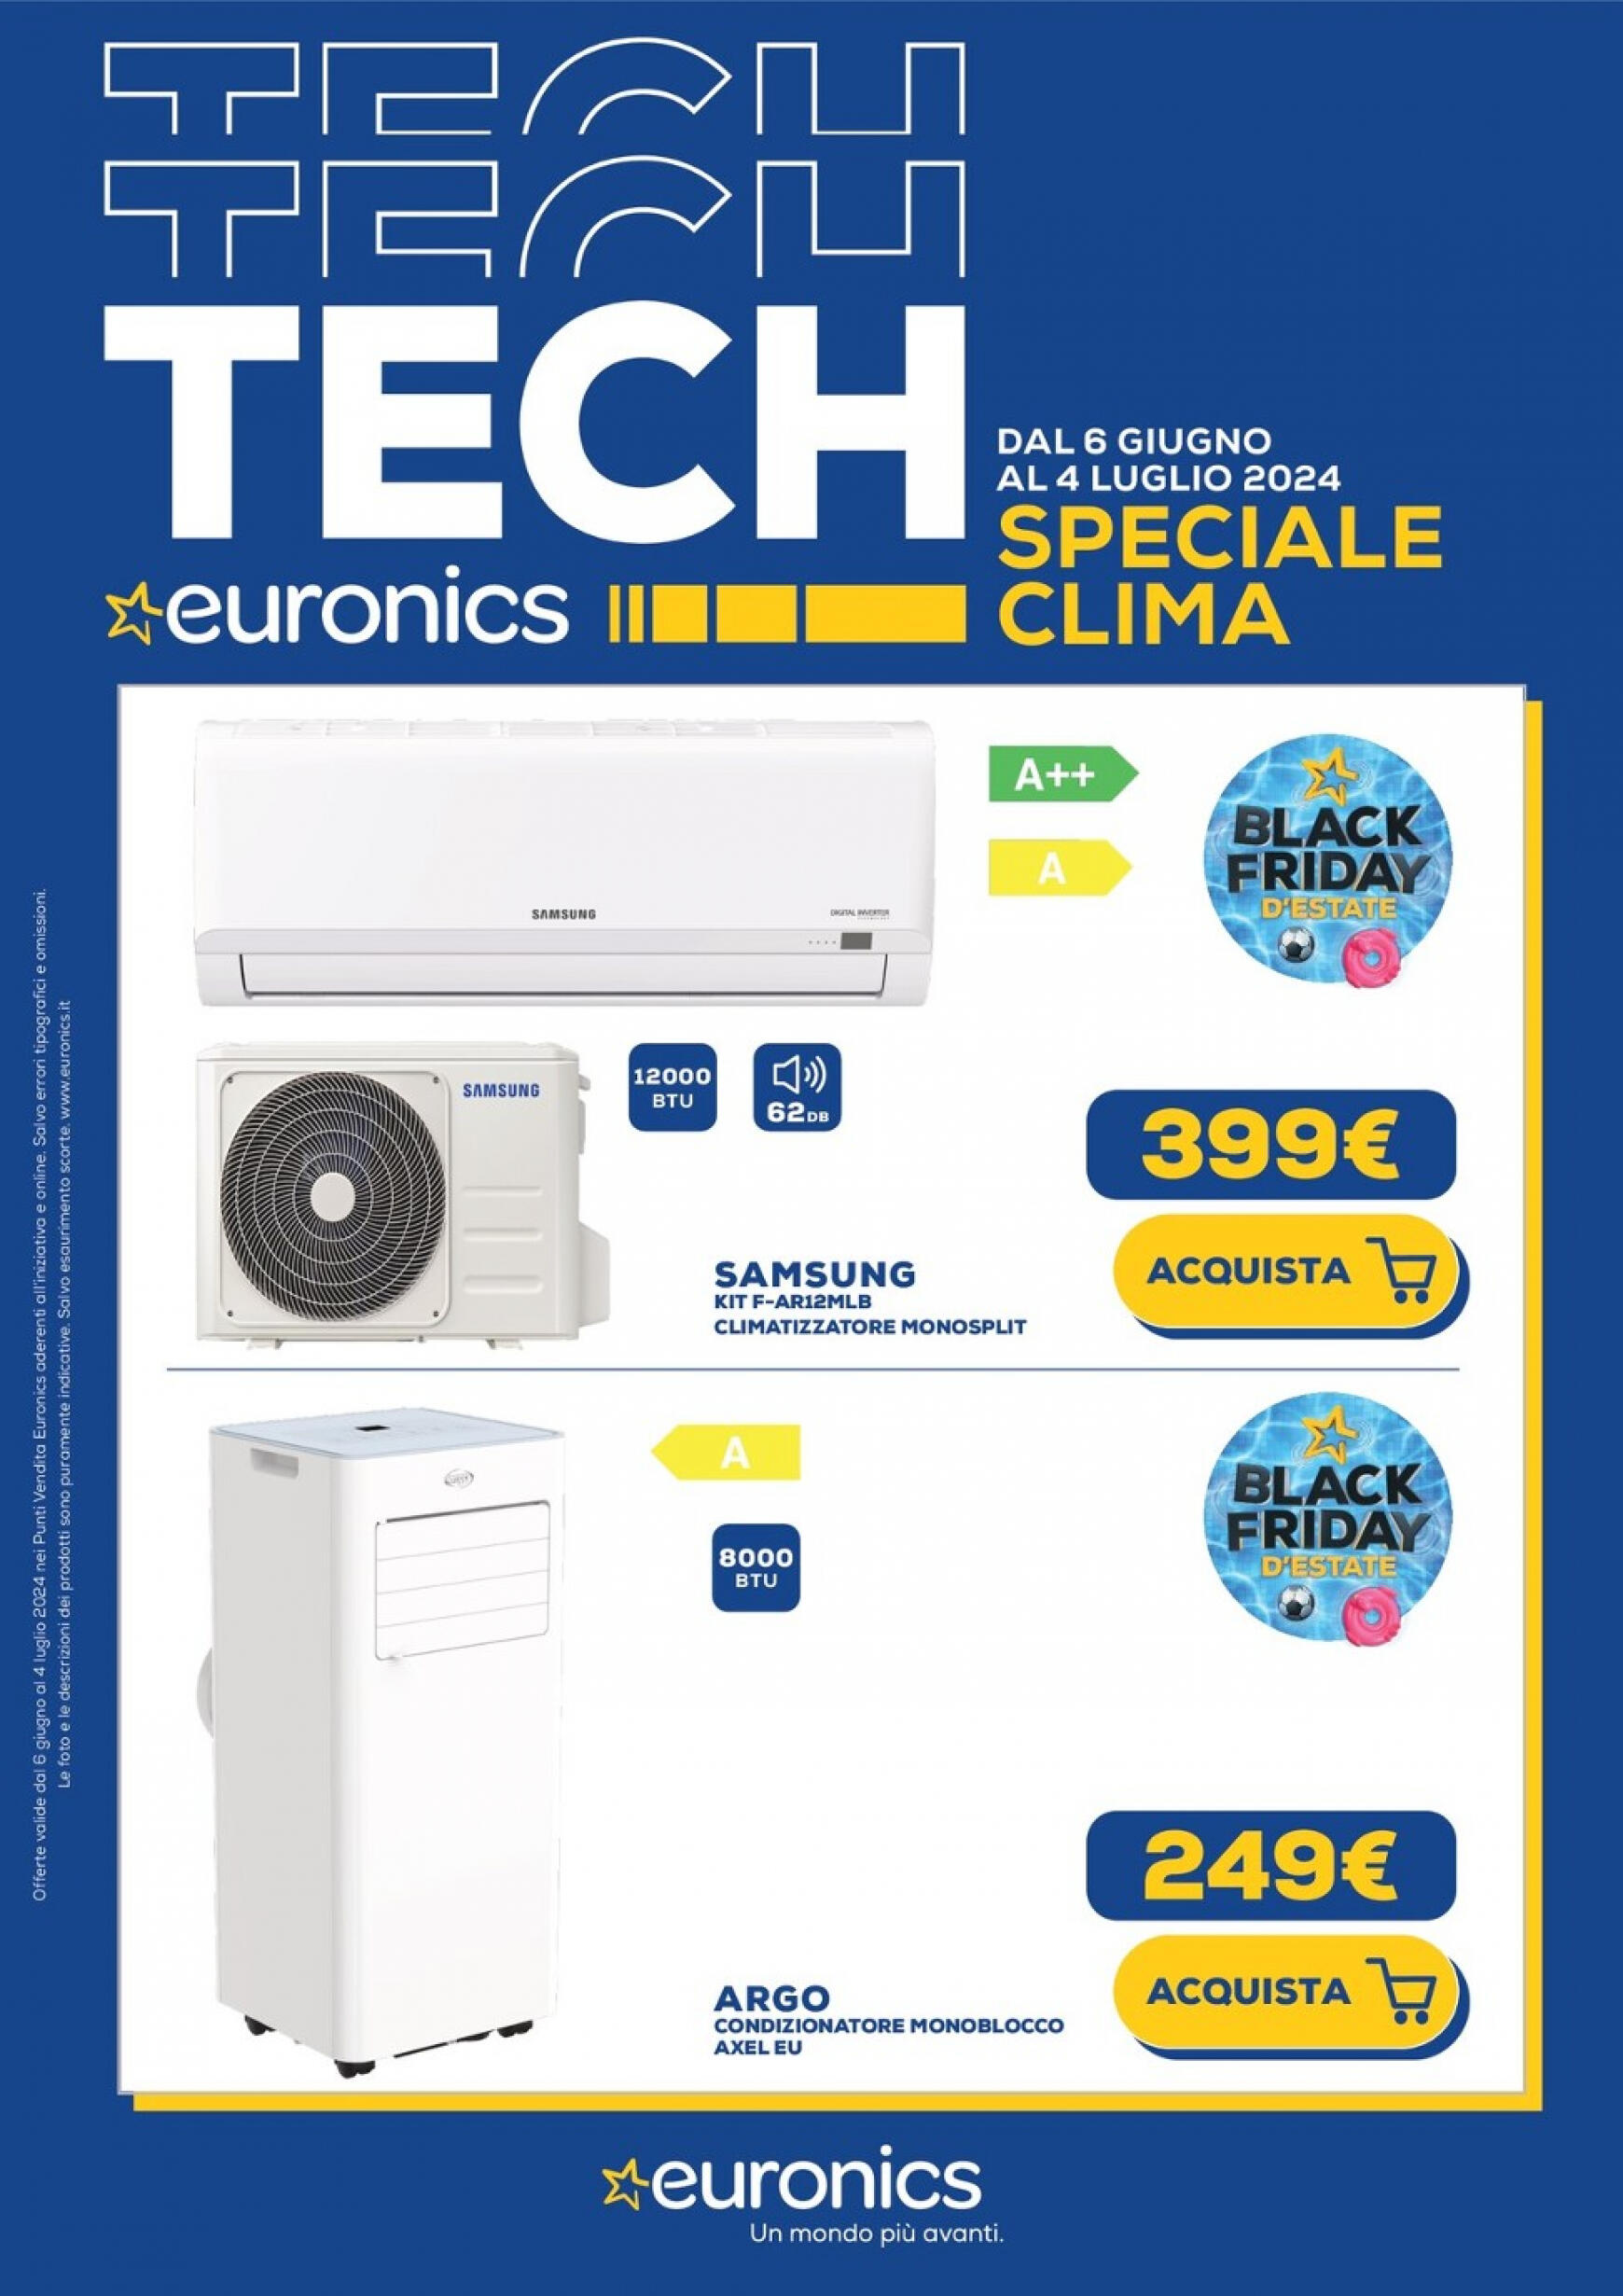 euronics - Nuovo volantino Euronics - Speciale Clima 06.06. - 04.07.